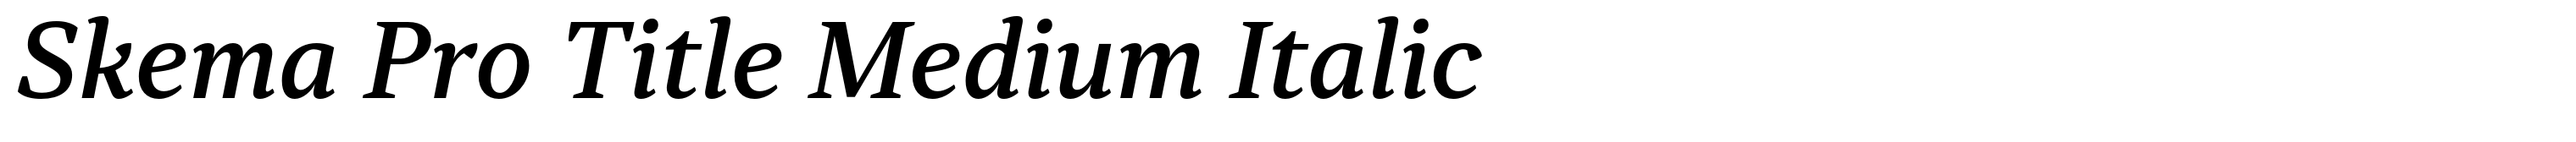 Skema Pro Title Medium Italic